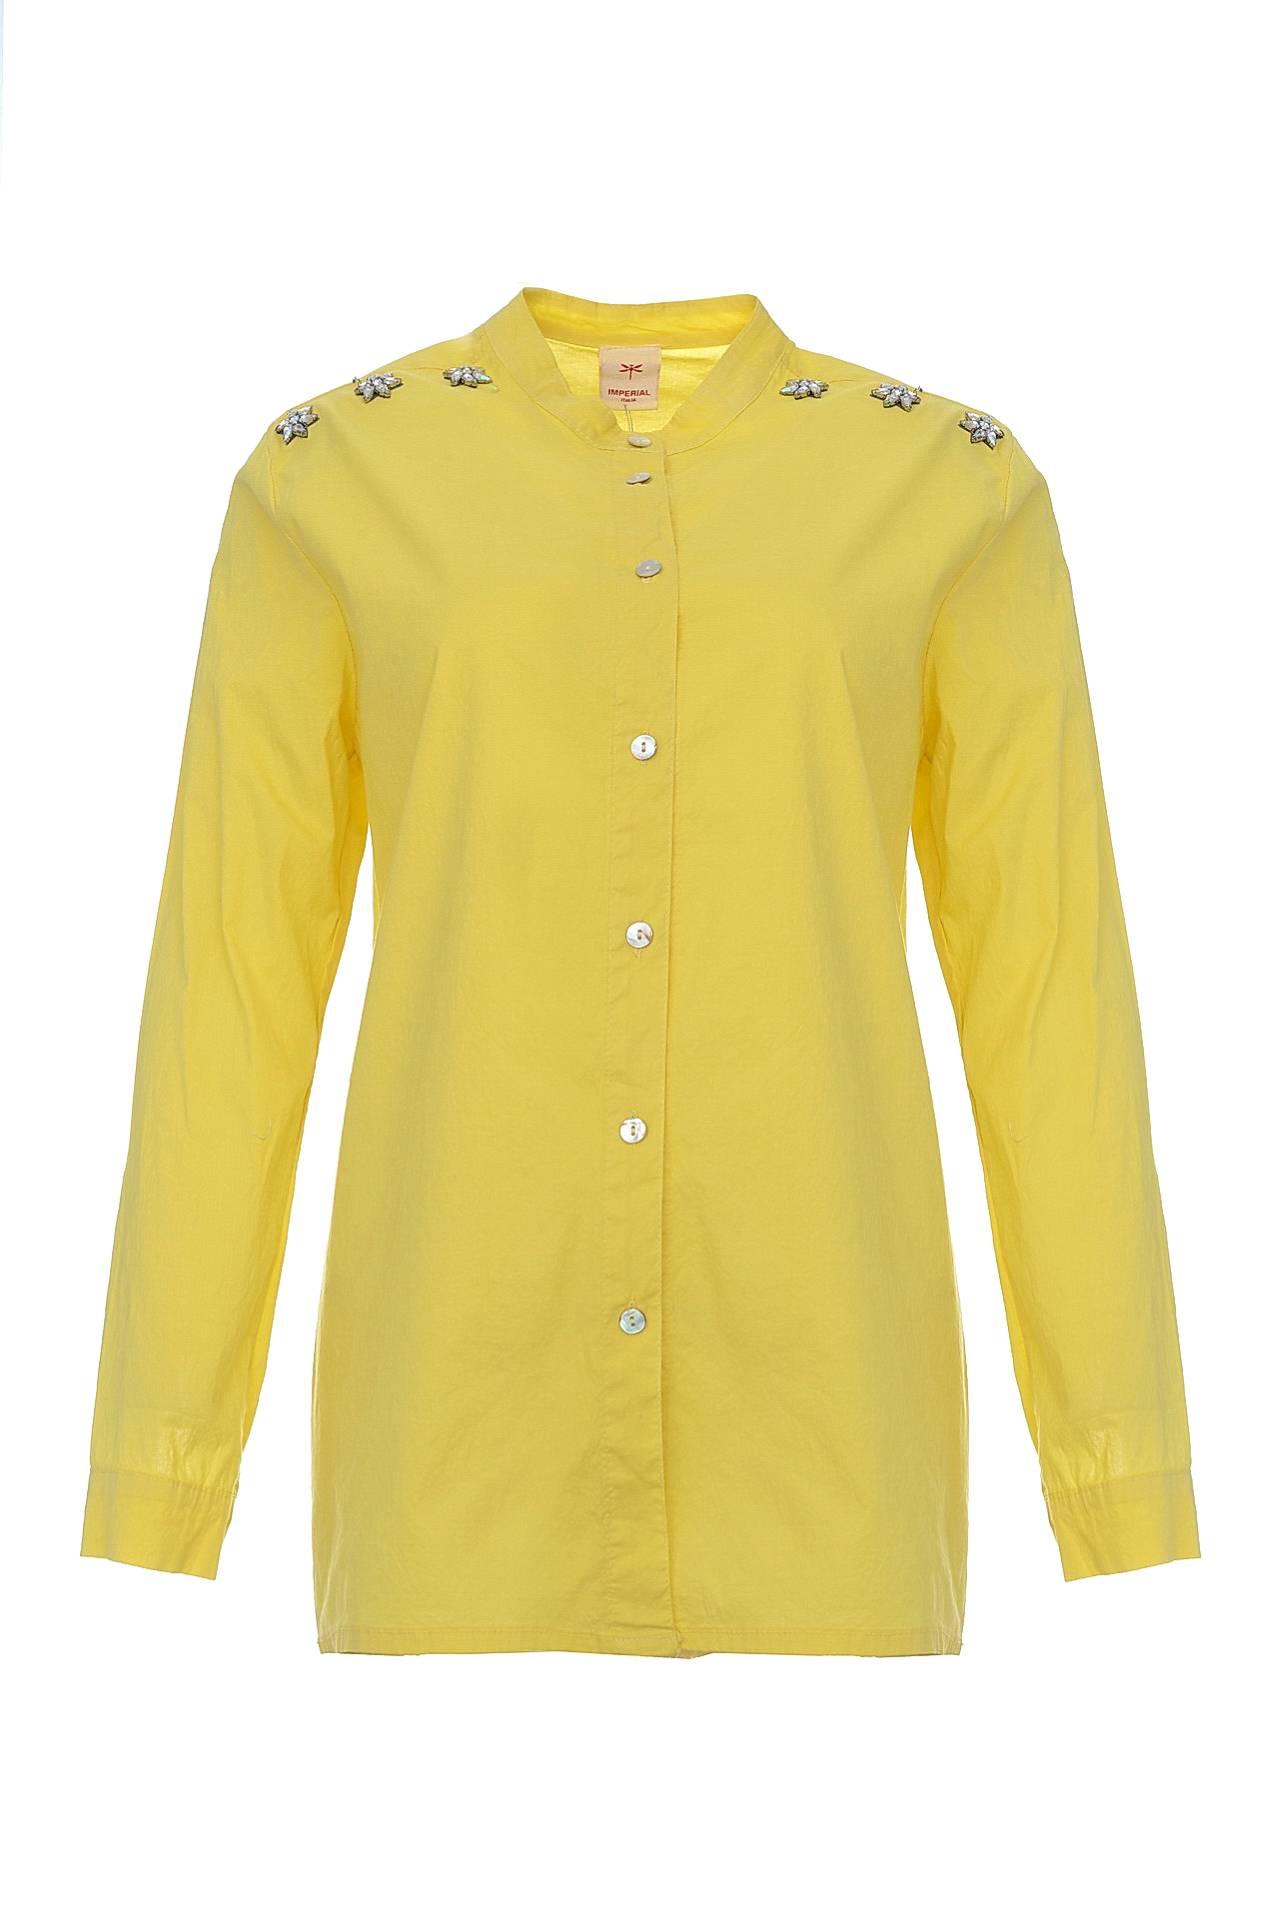 Одежда женская Рубашка IMPERIAL (C41874006/15.2). Купить за 5280 руб.